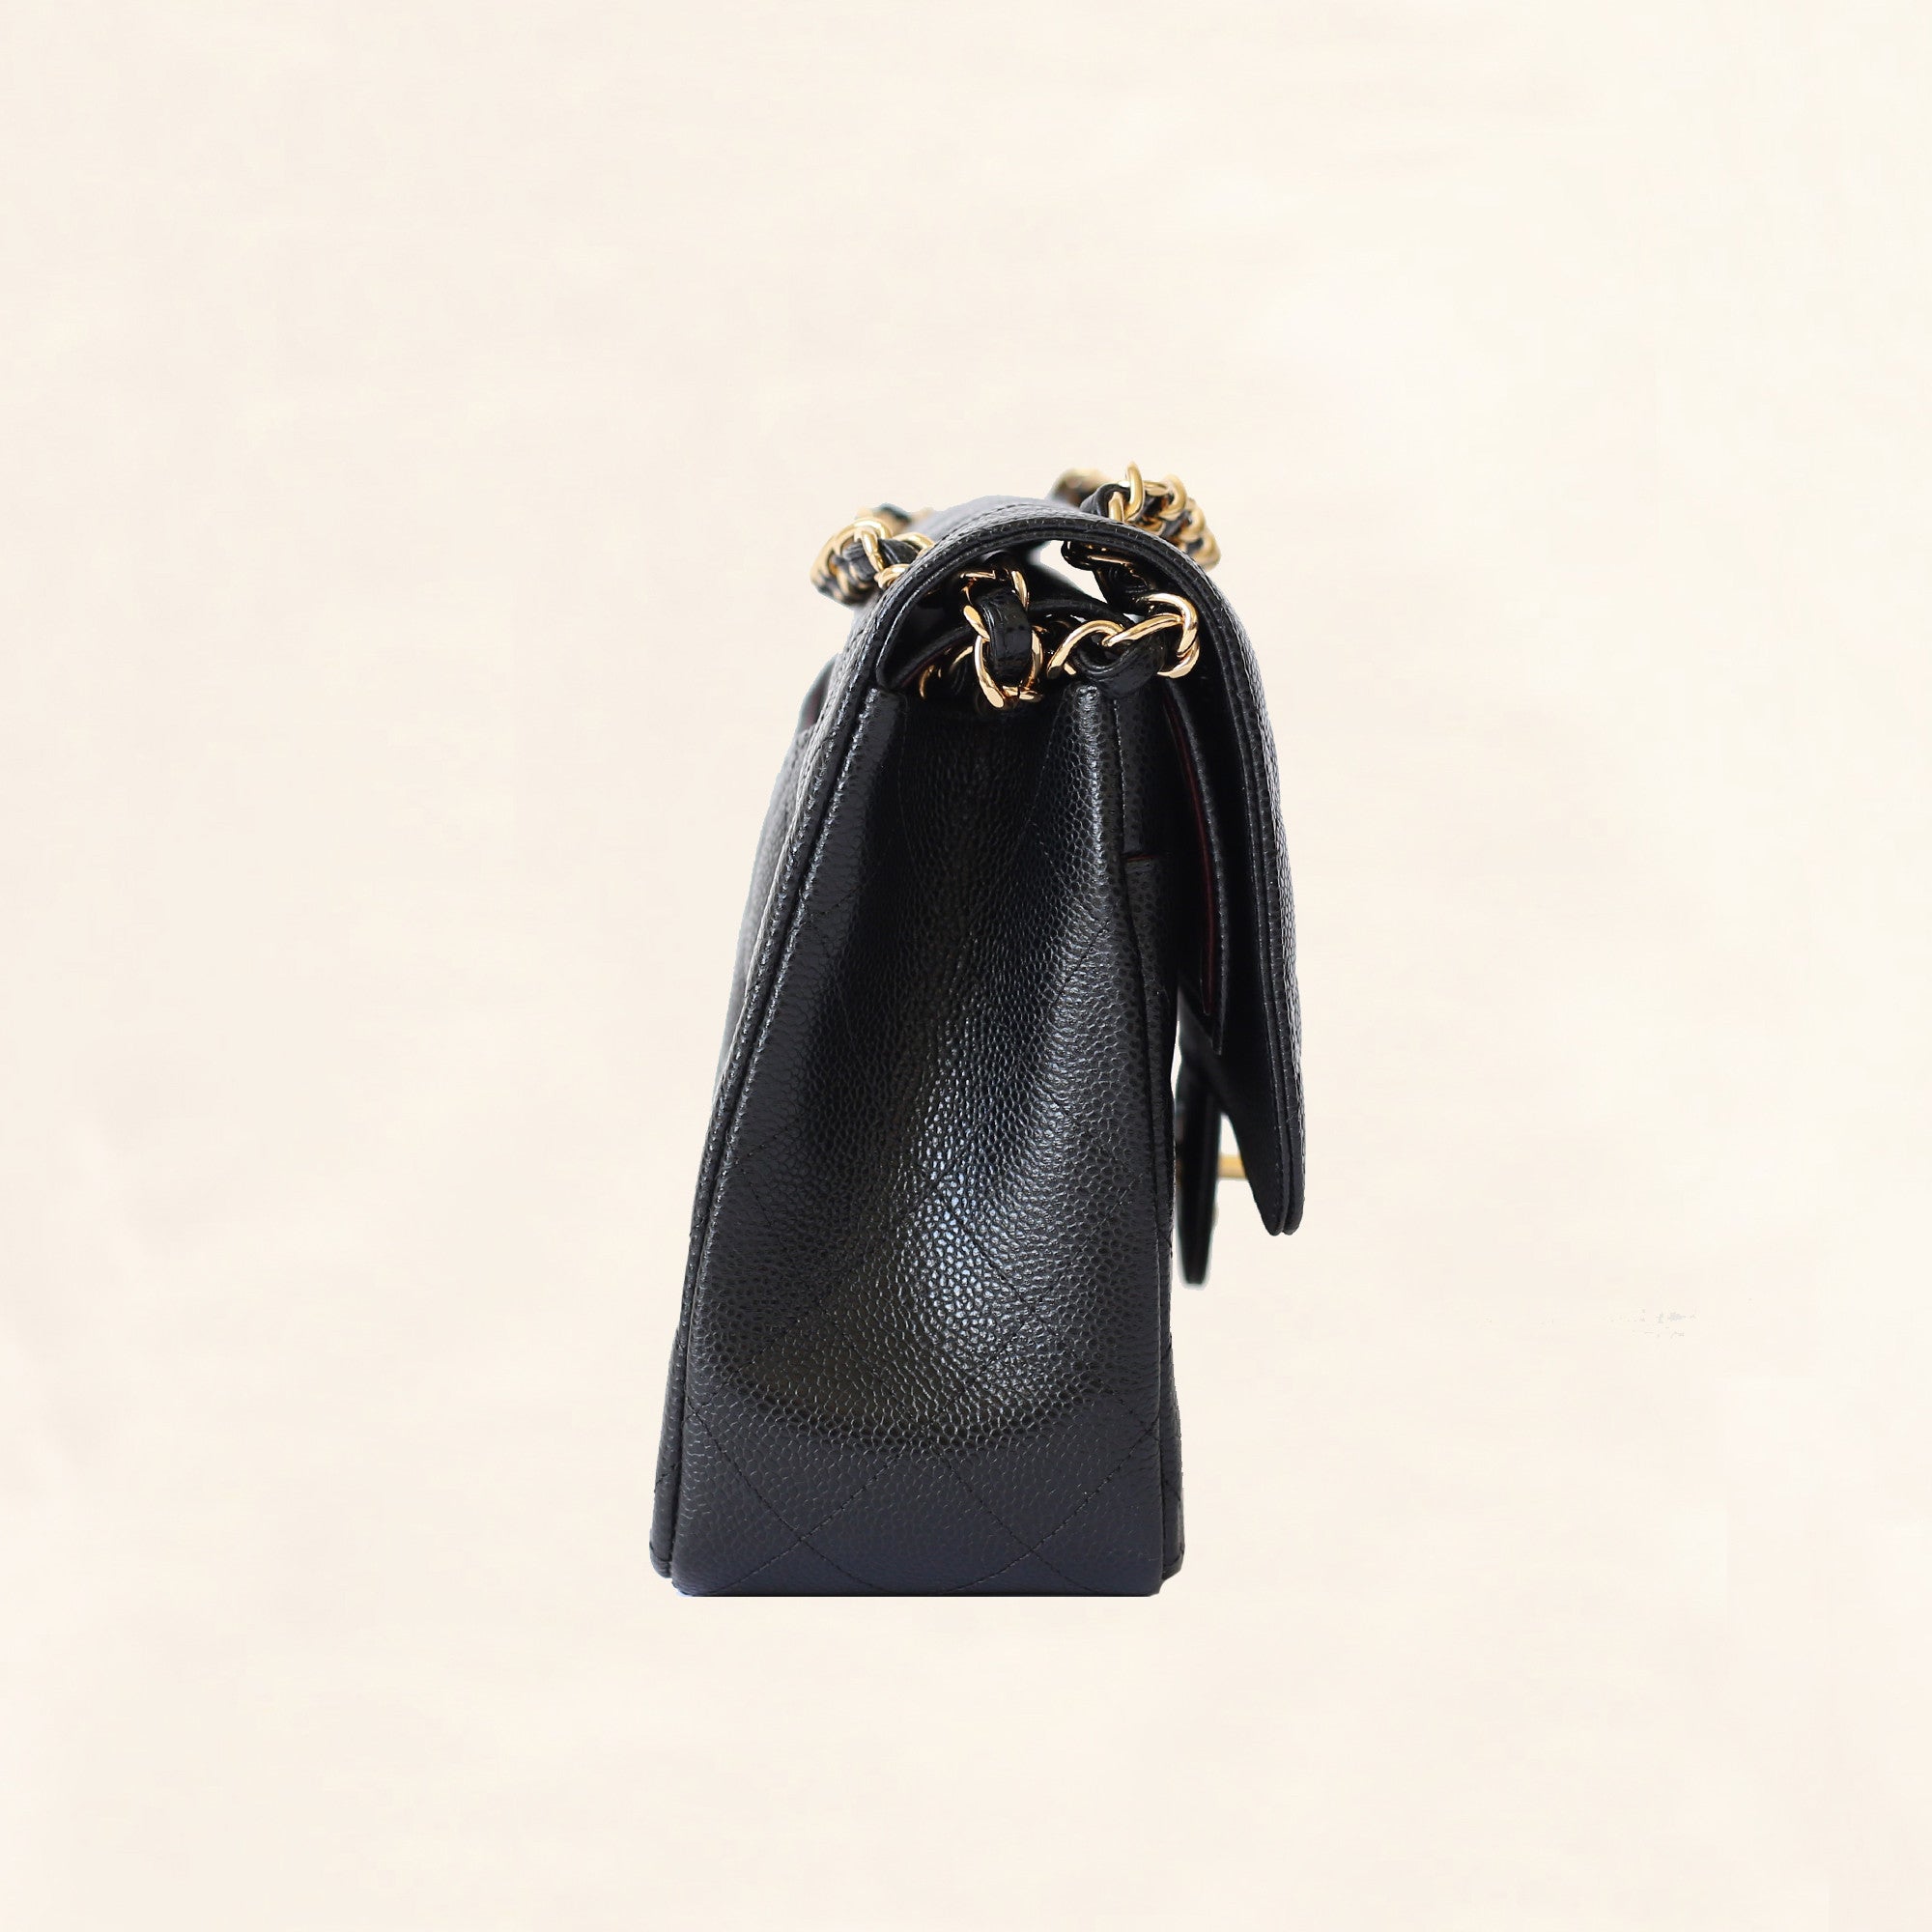 chanel handbag caviar leather